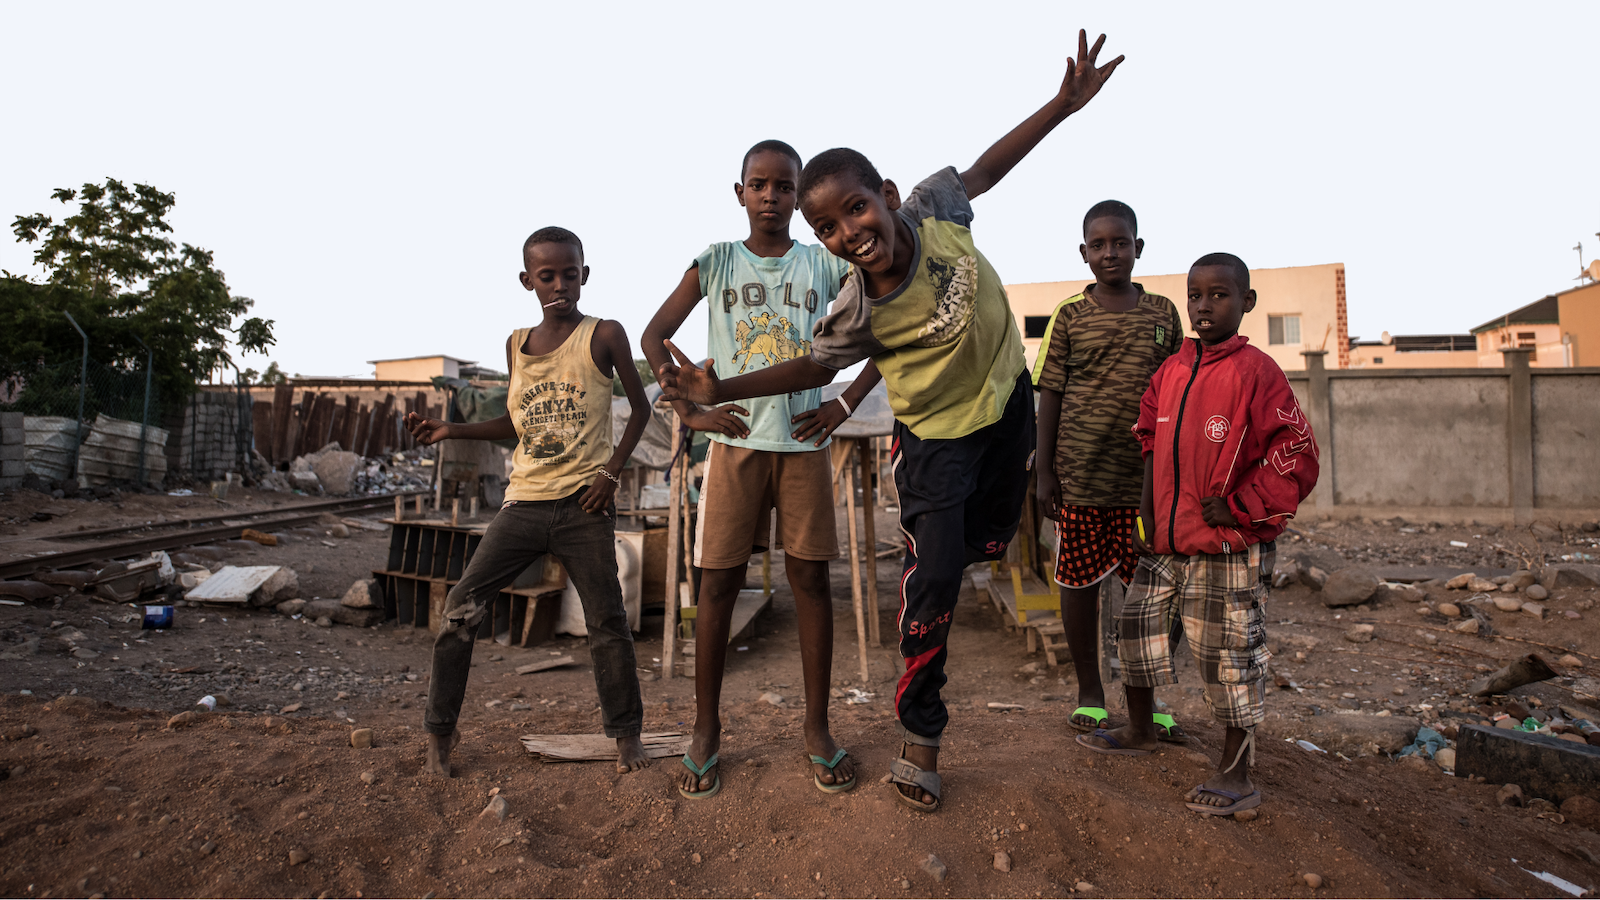 Kids playing outside in Kenya.